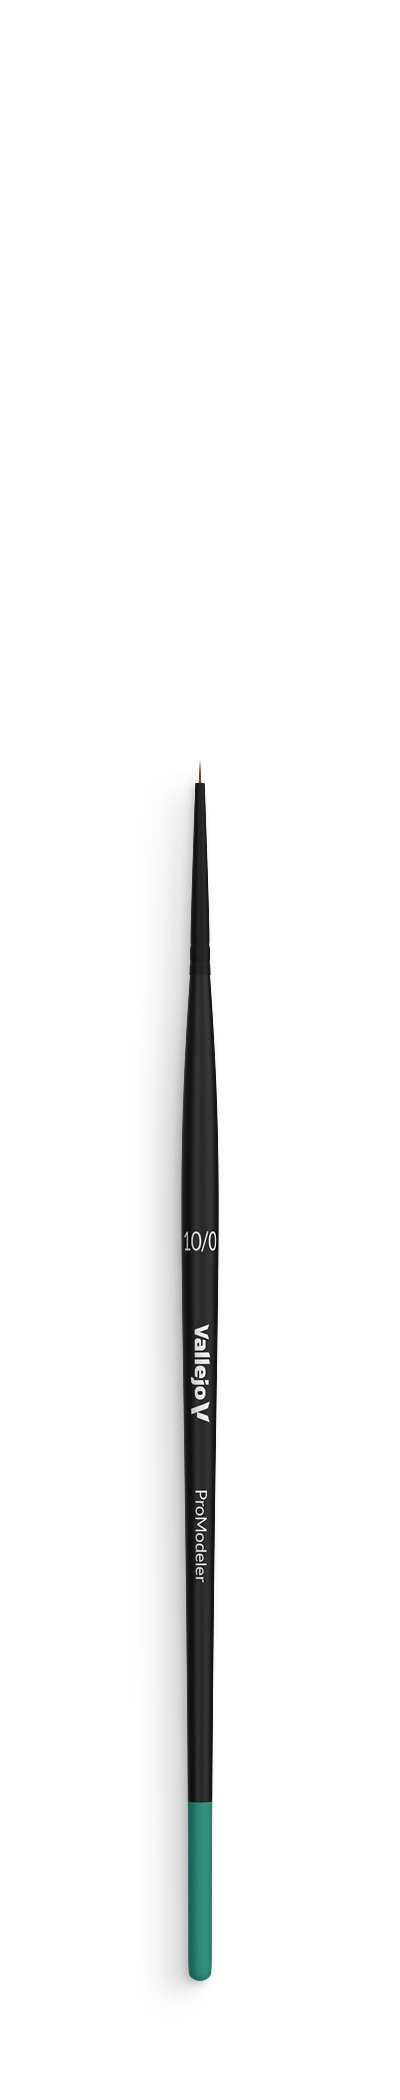 B01100 - Pro Modeler - NATURAL HAIR - ROUND BRUSH NO. 10/0 - Vallejo Pro Modeler